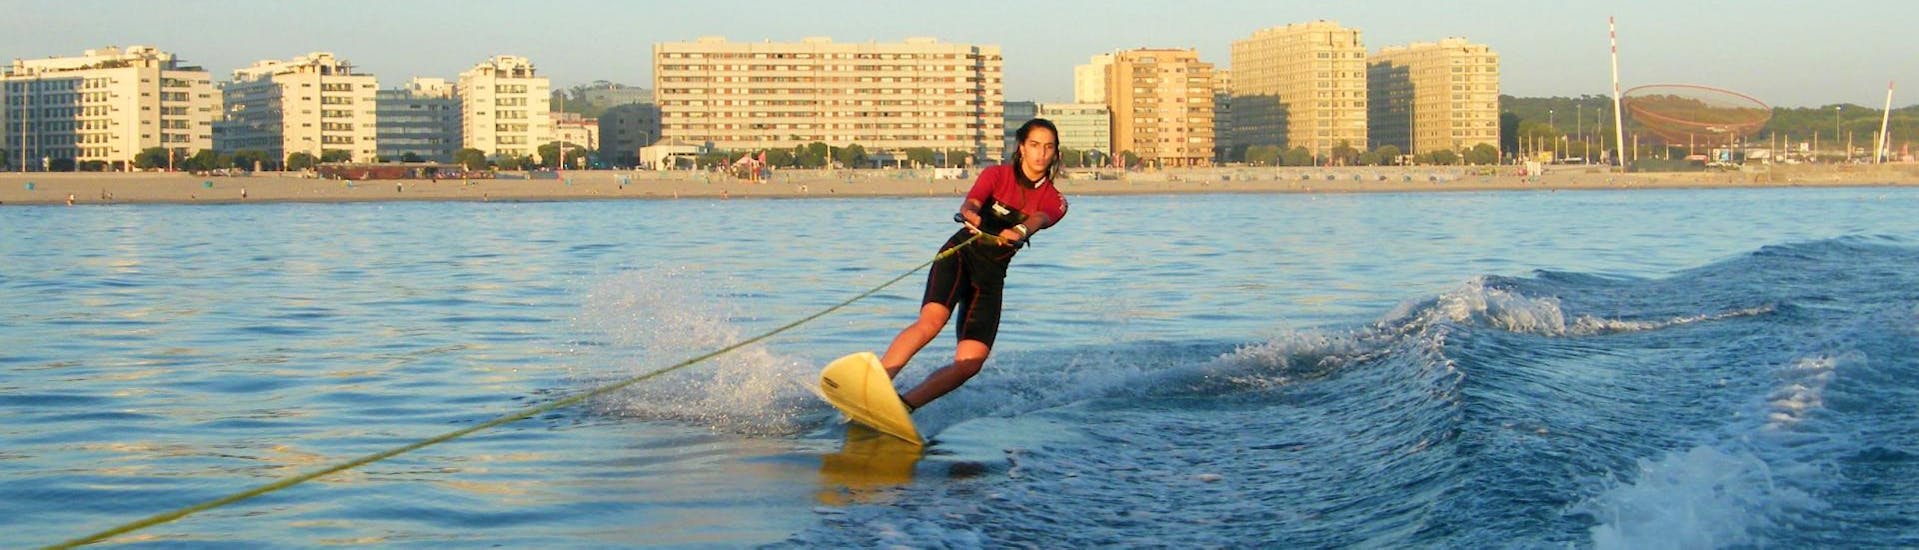 Wakeboard a Matosinhos - Matosinhos Beach.